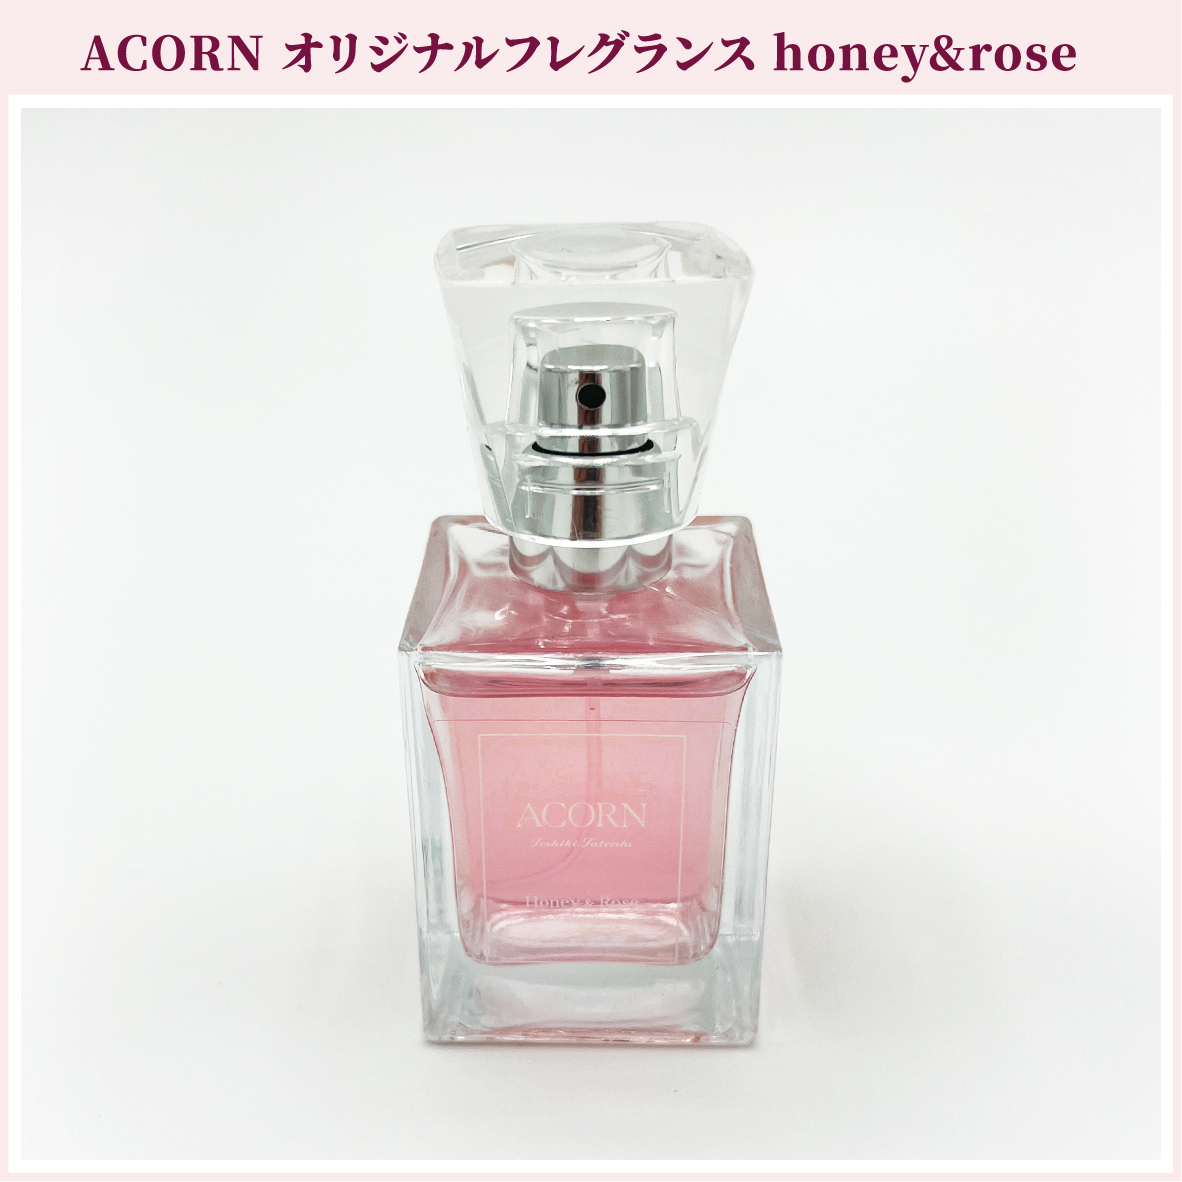 ACORN オリジナルフレグランス honey&rose (単品)